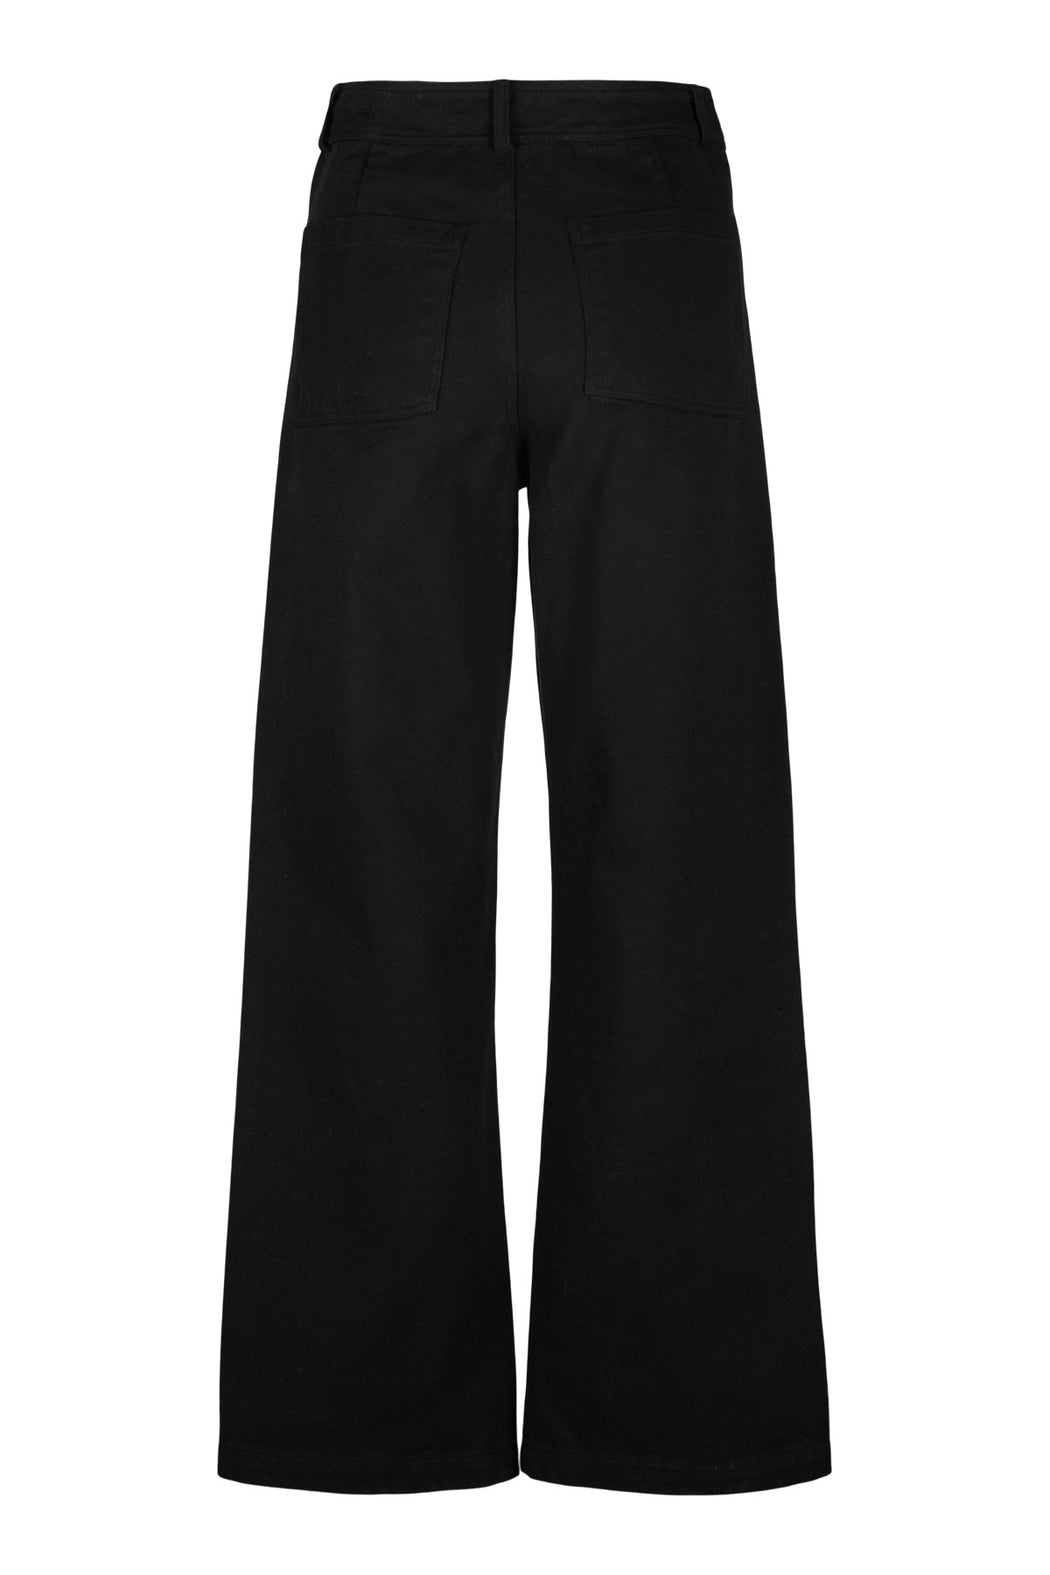 Envelope1976 Flare pant - Organic cotton Pants Black